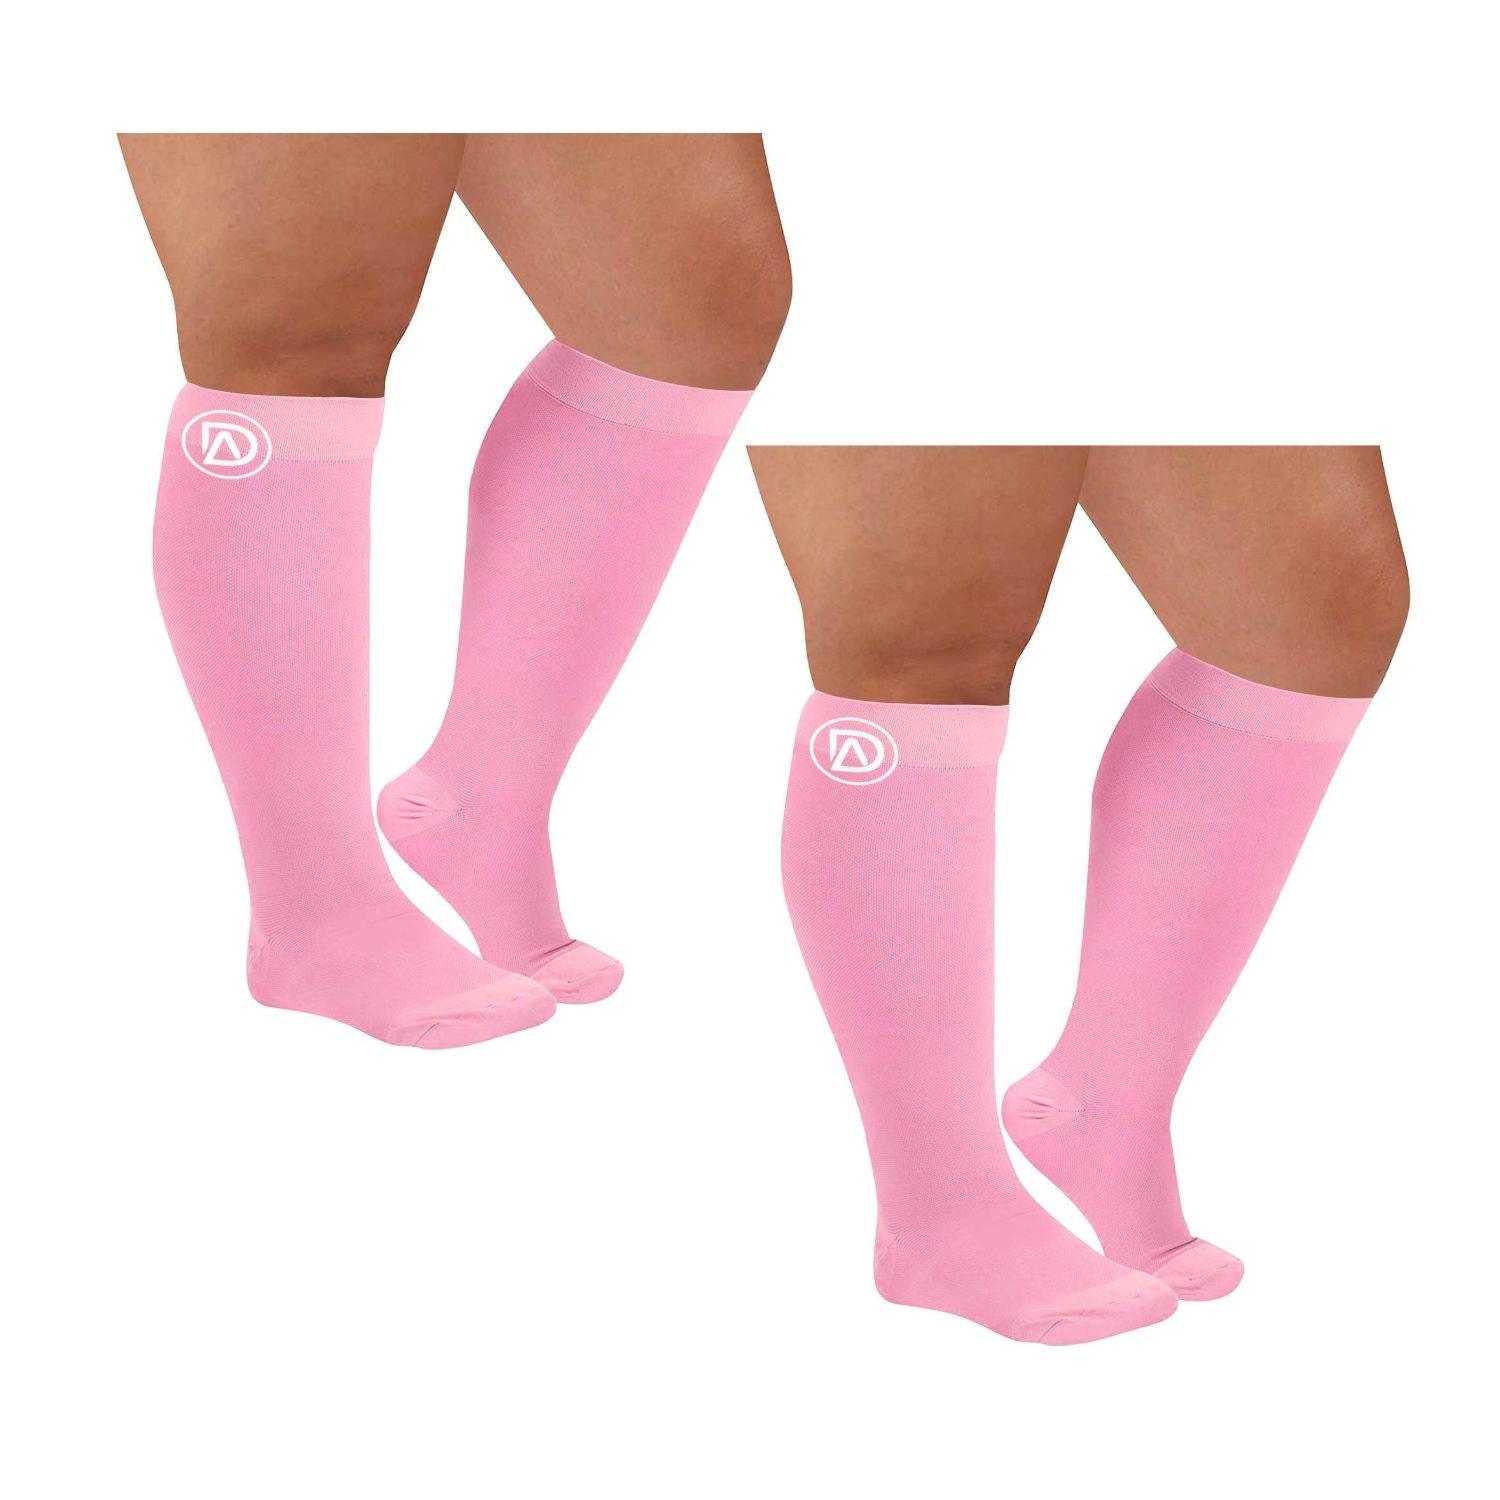 Plus Size Compression Socks Bundles - TheGivenGet